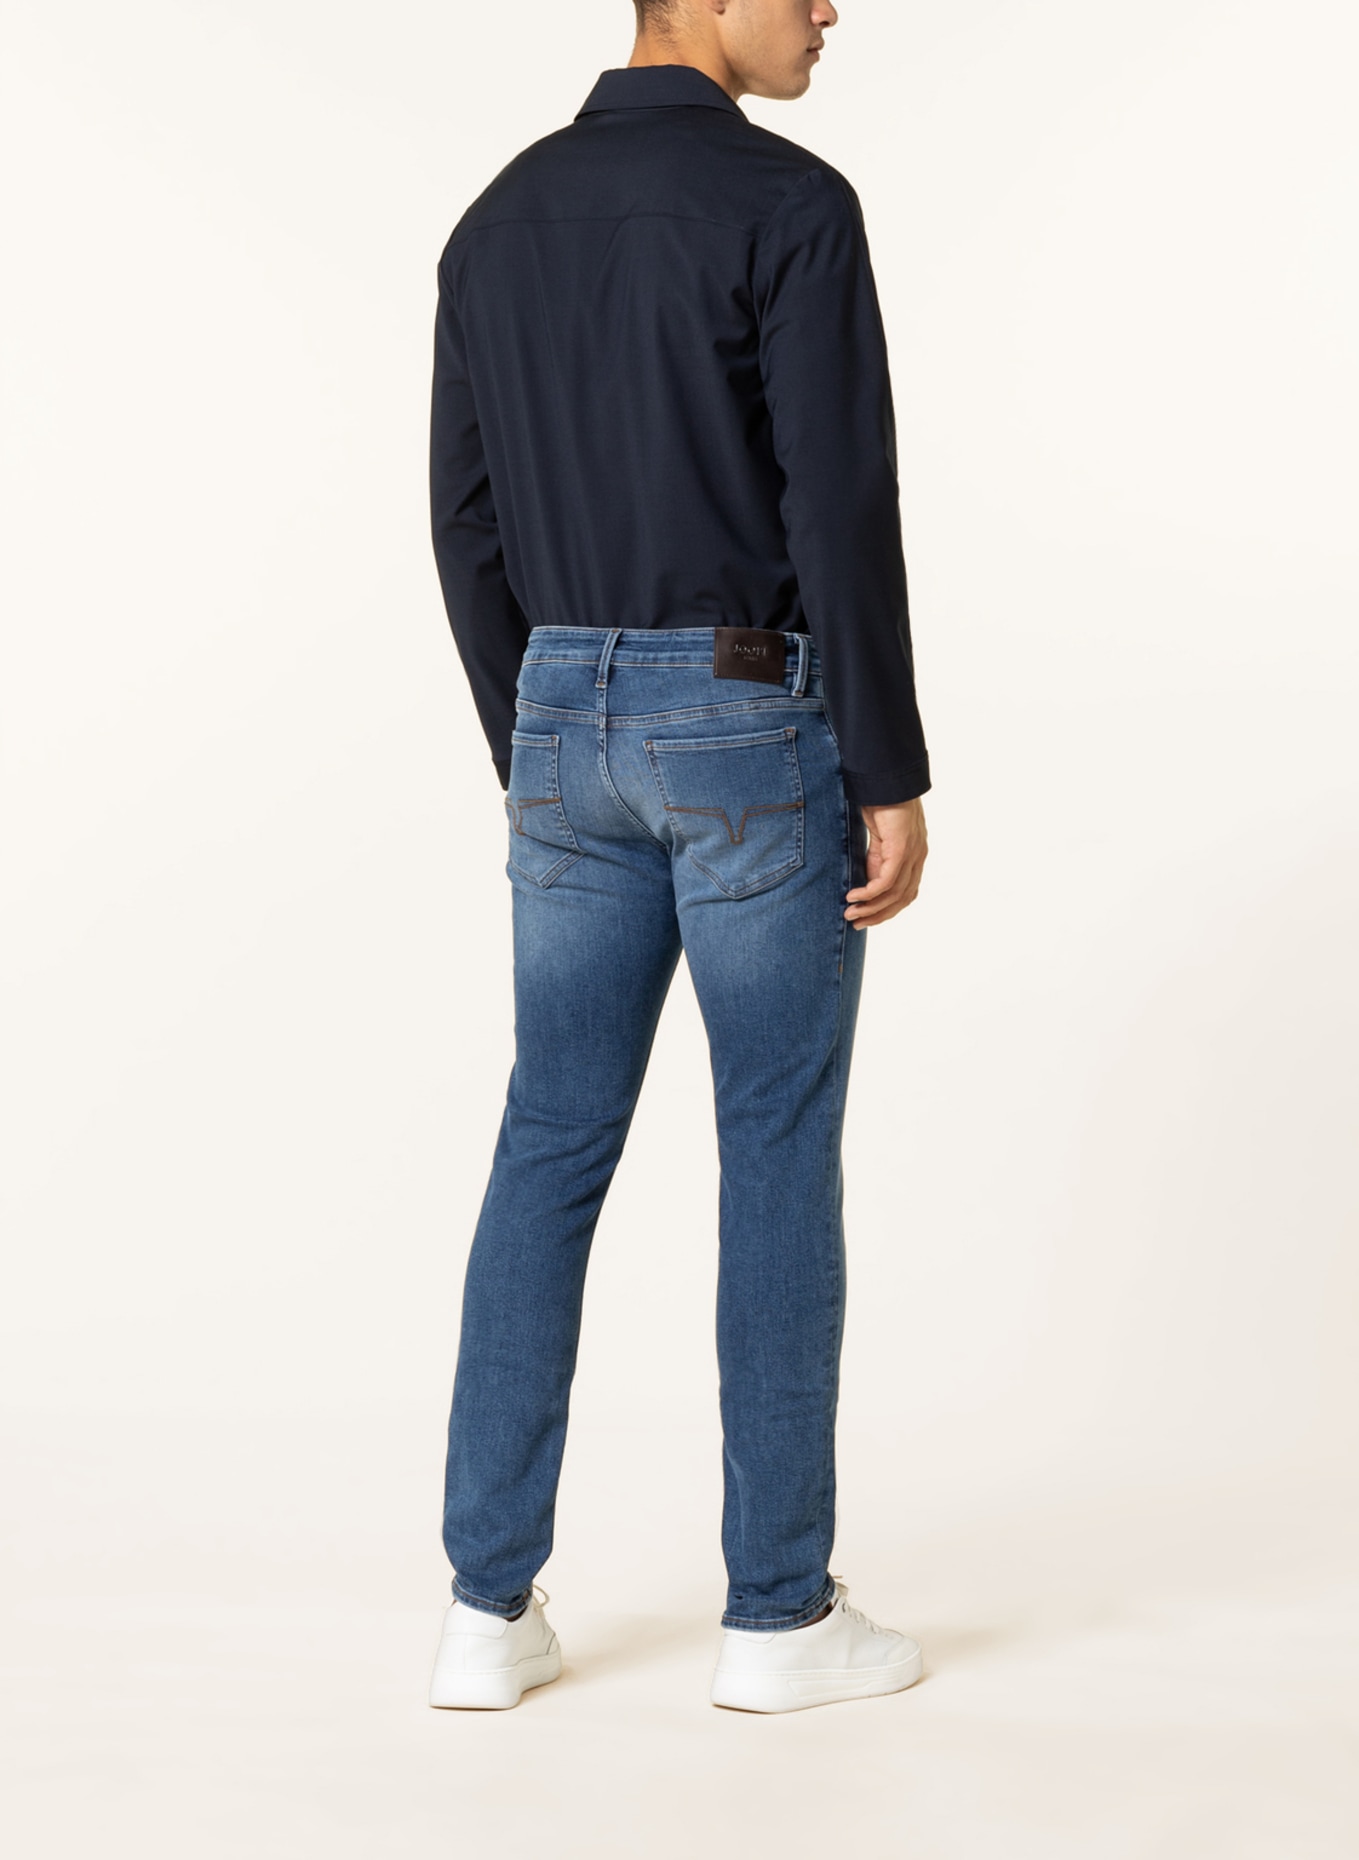 JOOP! JEANS Jeans STEPHEN Slim Fit, Farbe: 445 TurquoiseAqua              445 (Bild 3)